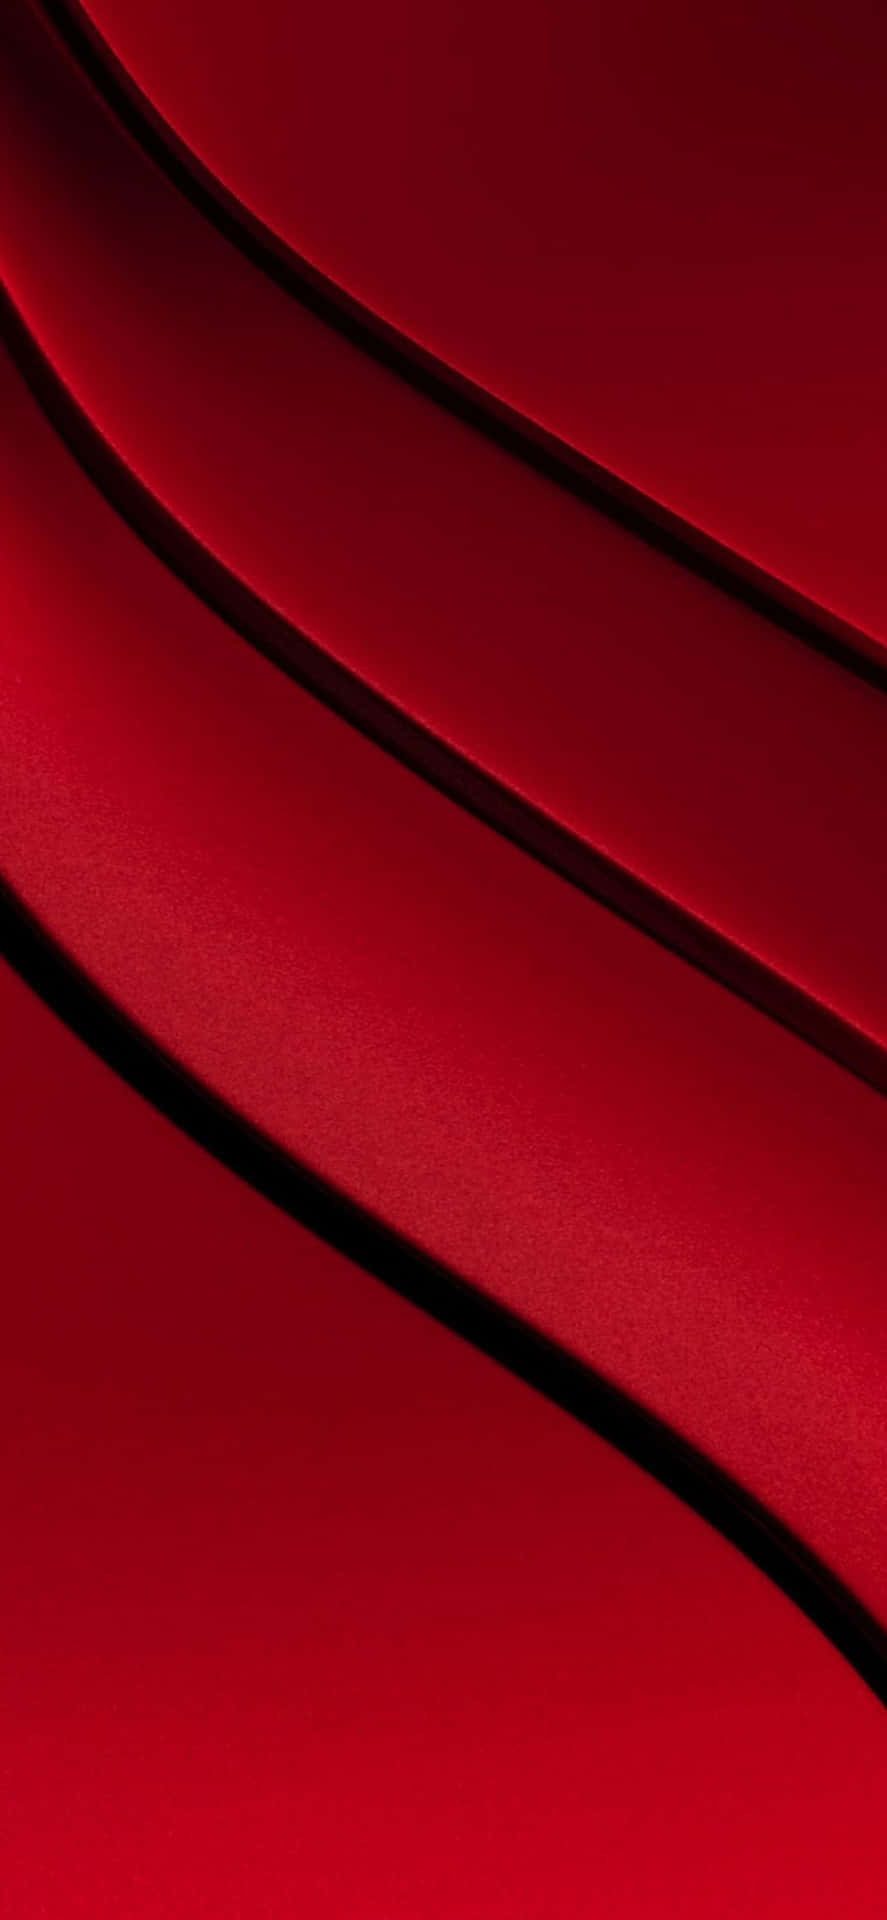 Unfondo Rojo Con Una Forma Curva